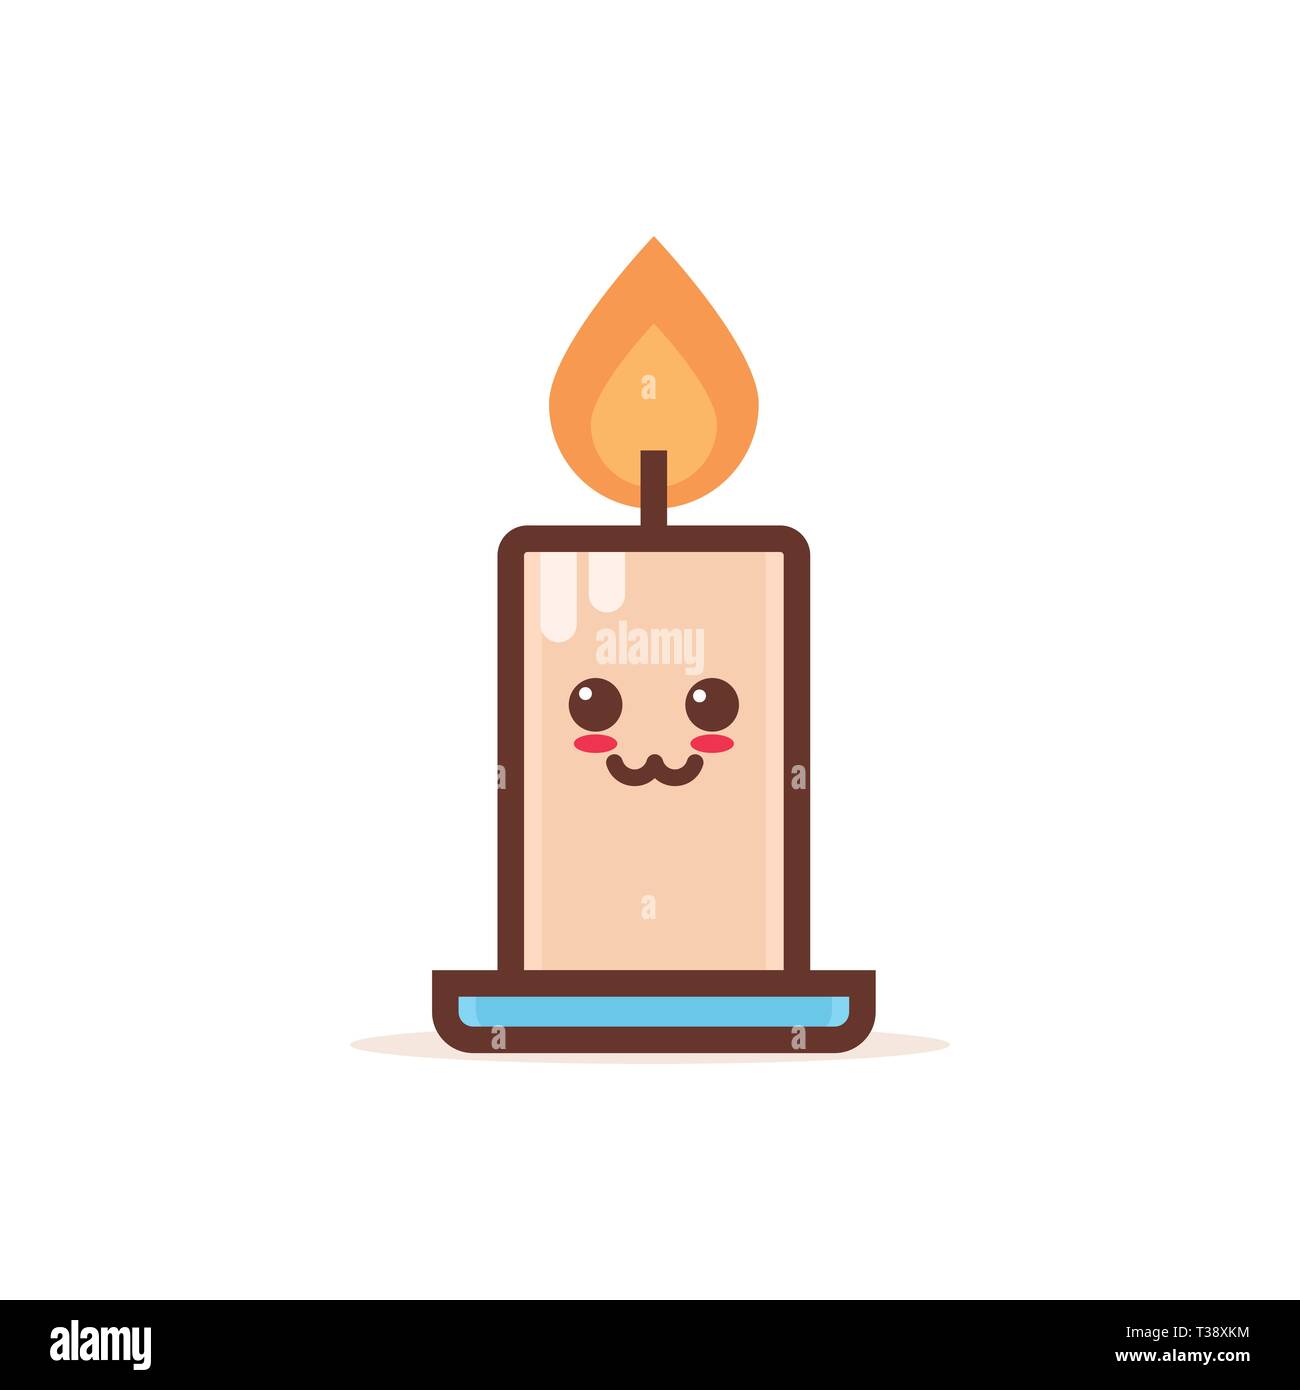 Cute brennende Kerze cartoon comic Charakter mit lächelnden Gesicht  glücklich Emoji kawaii Stil Flamme Feuer feier Konzept Vector Illustration  Stock-Vektorgrafik - Alamy